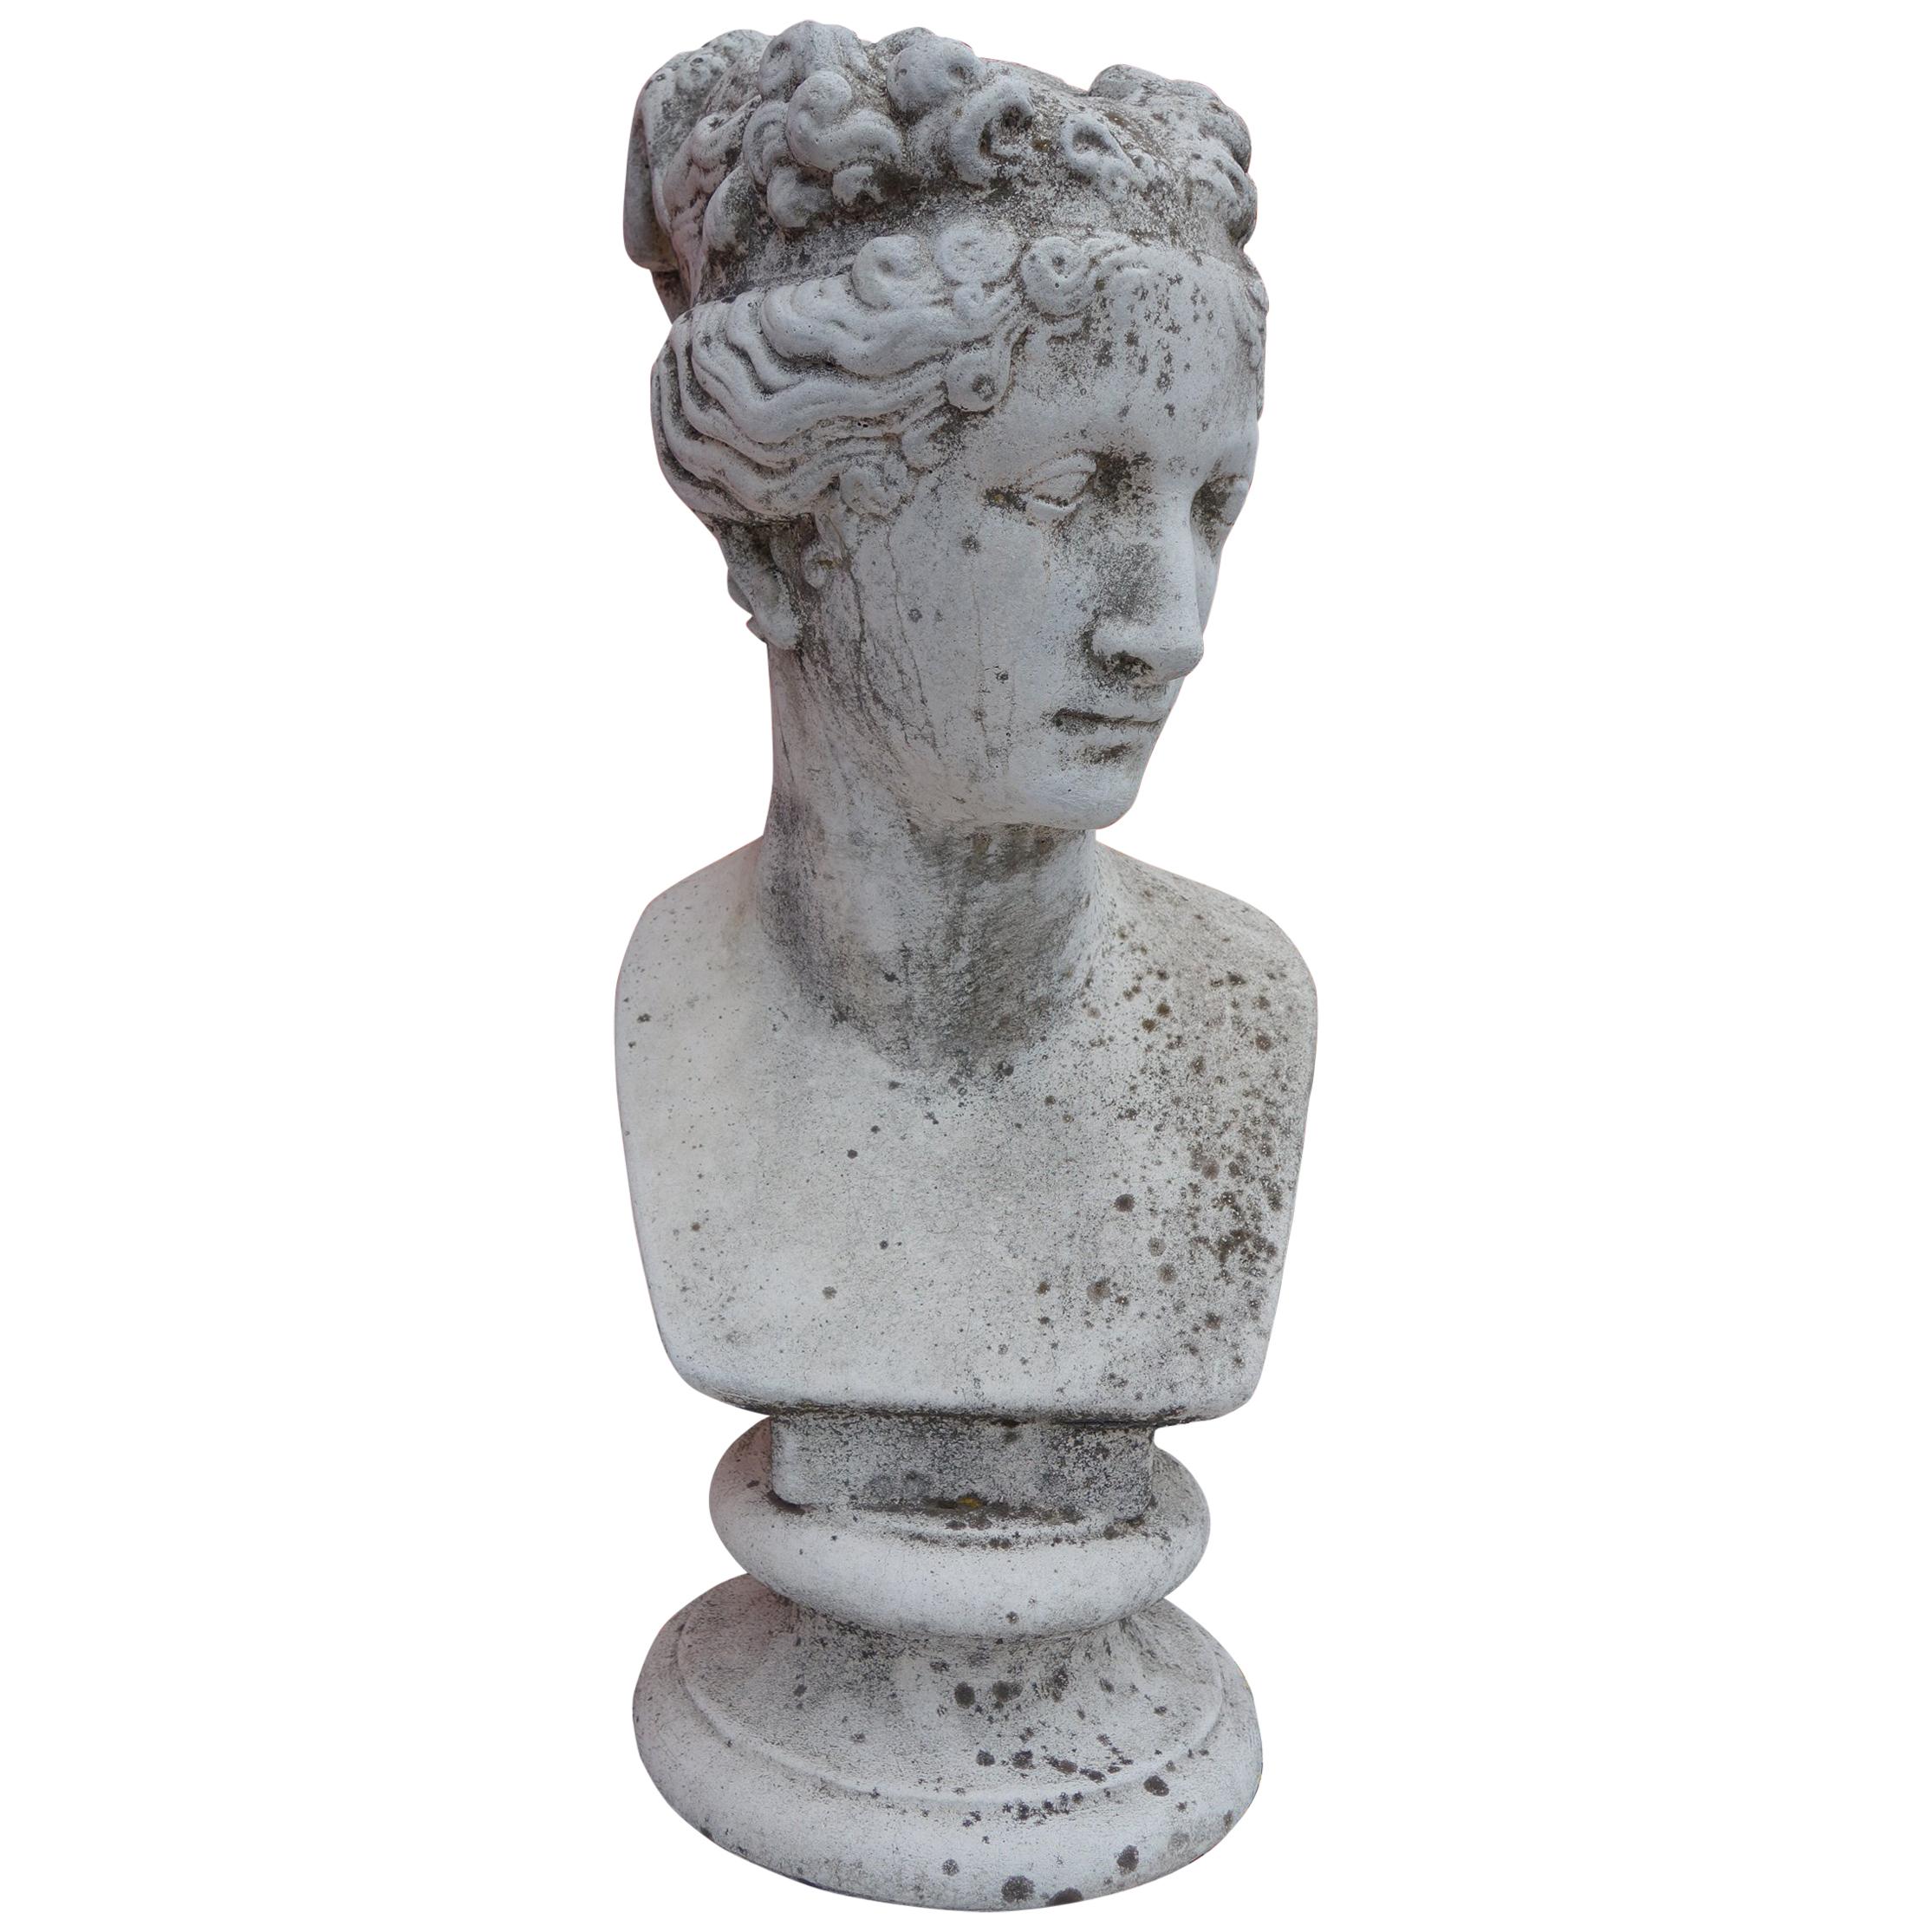 19th Century Italian Renaissance Style Bust of Venus Goddess of Love and Victory